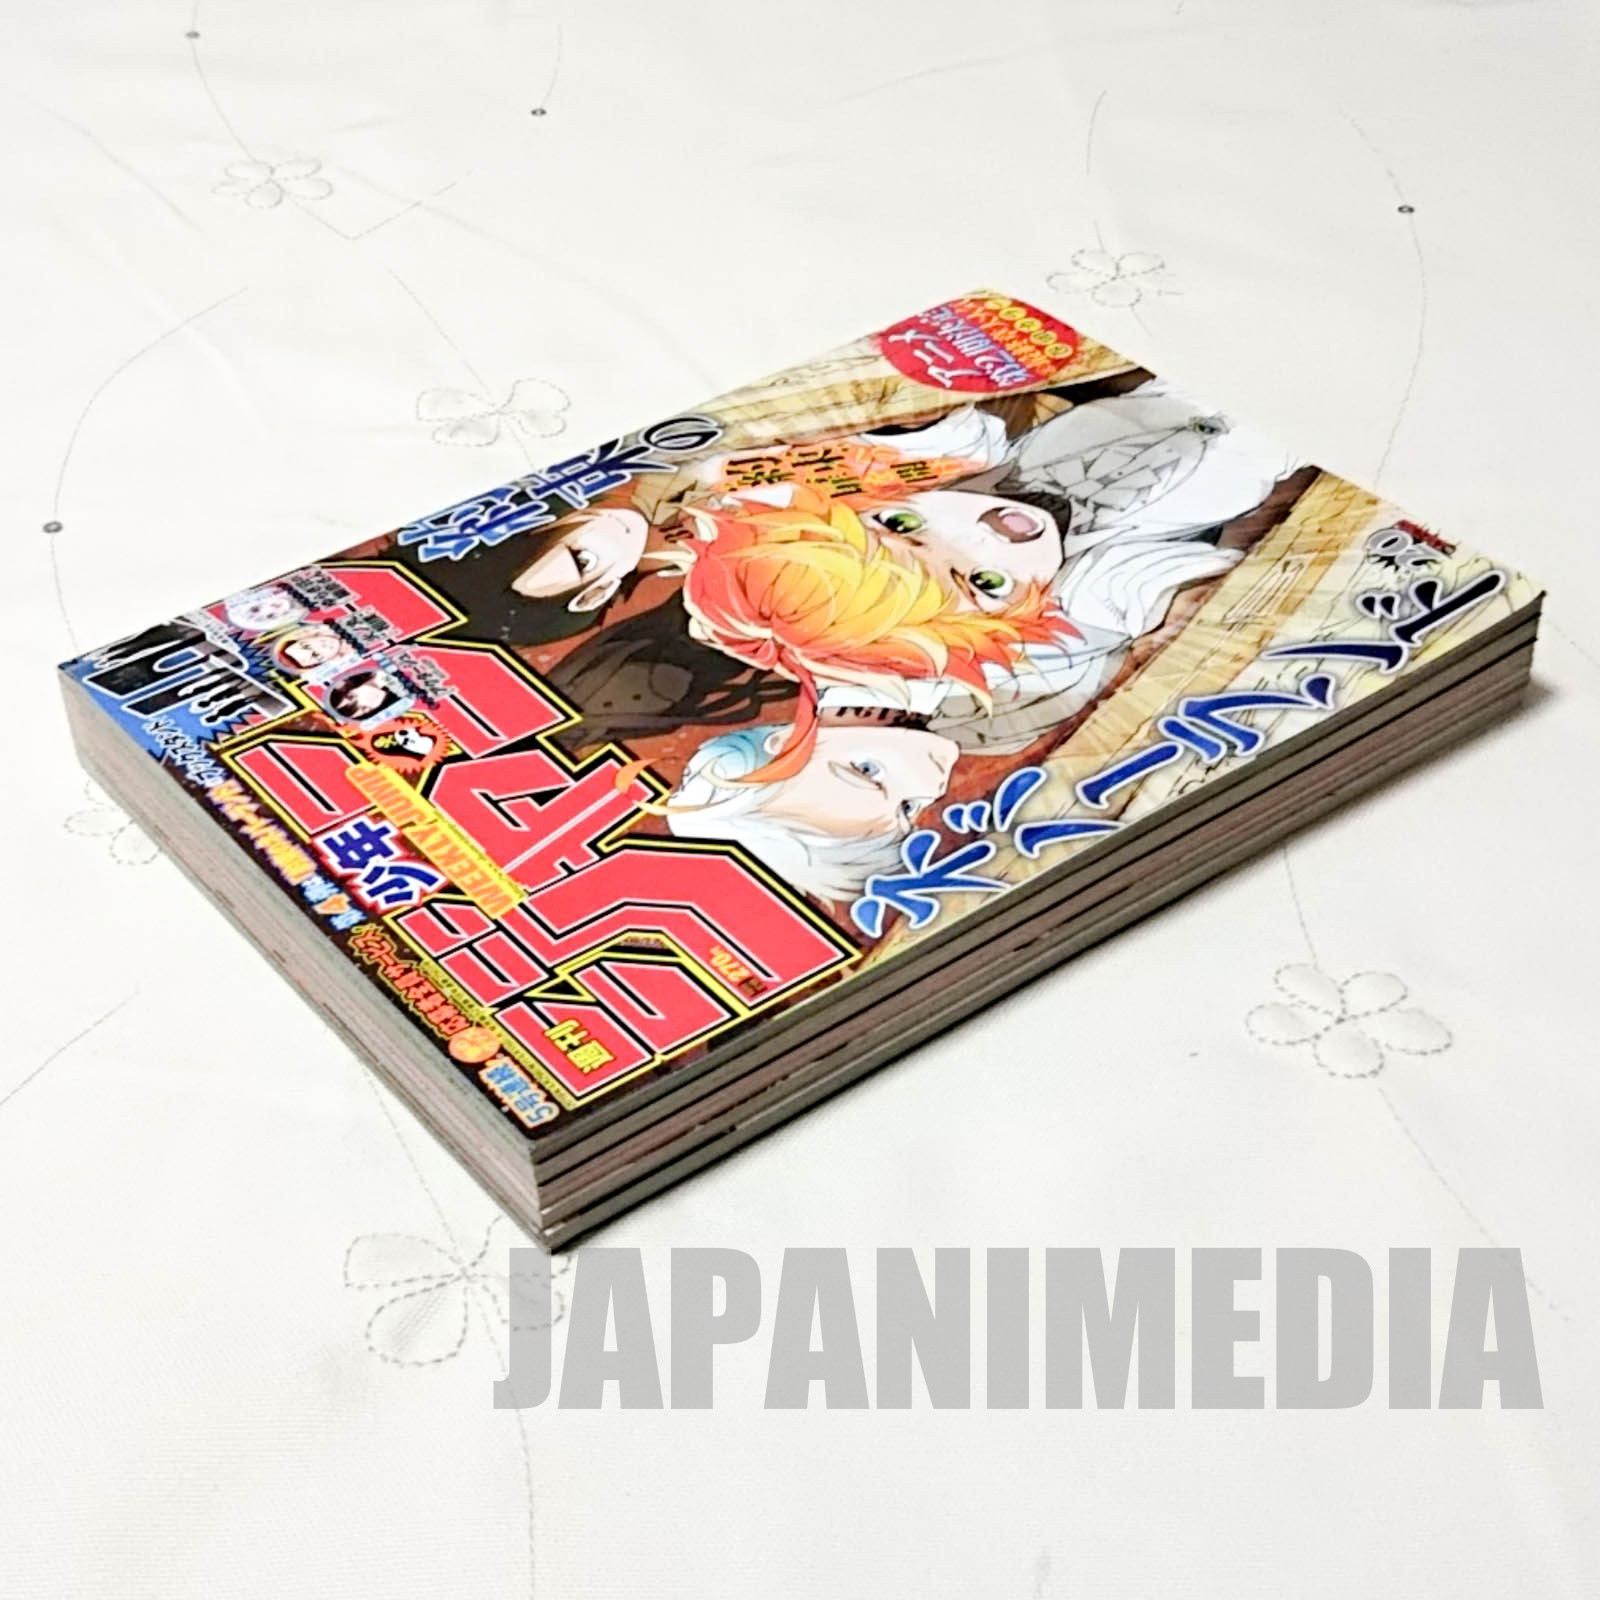 Weekly Shonen JUMP  Vol.20 2019 The Promised Neverland / Japanese Magazine JAPAN MANGA